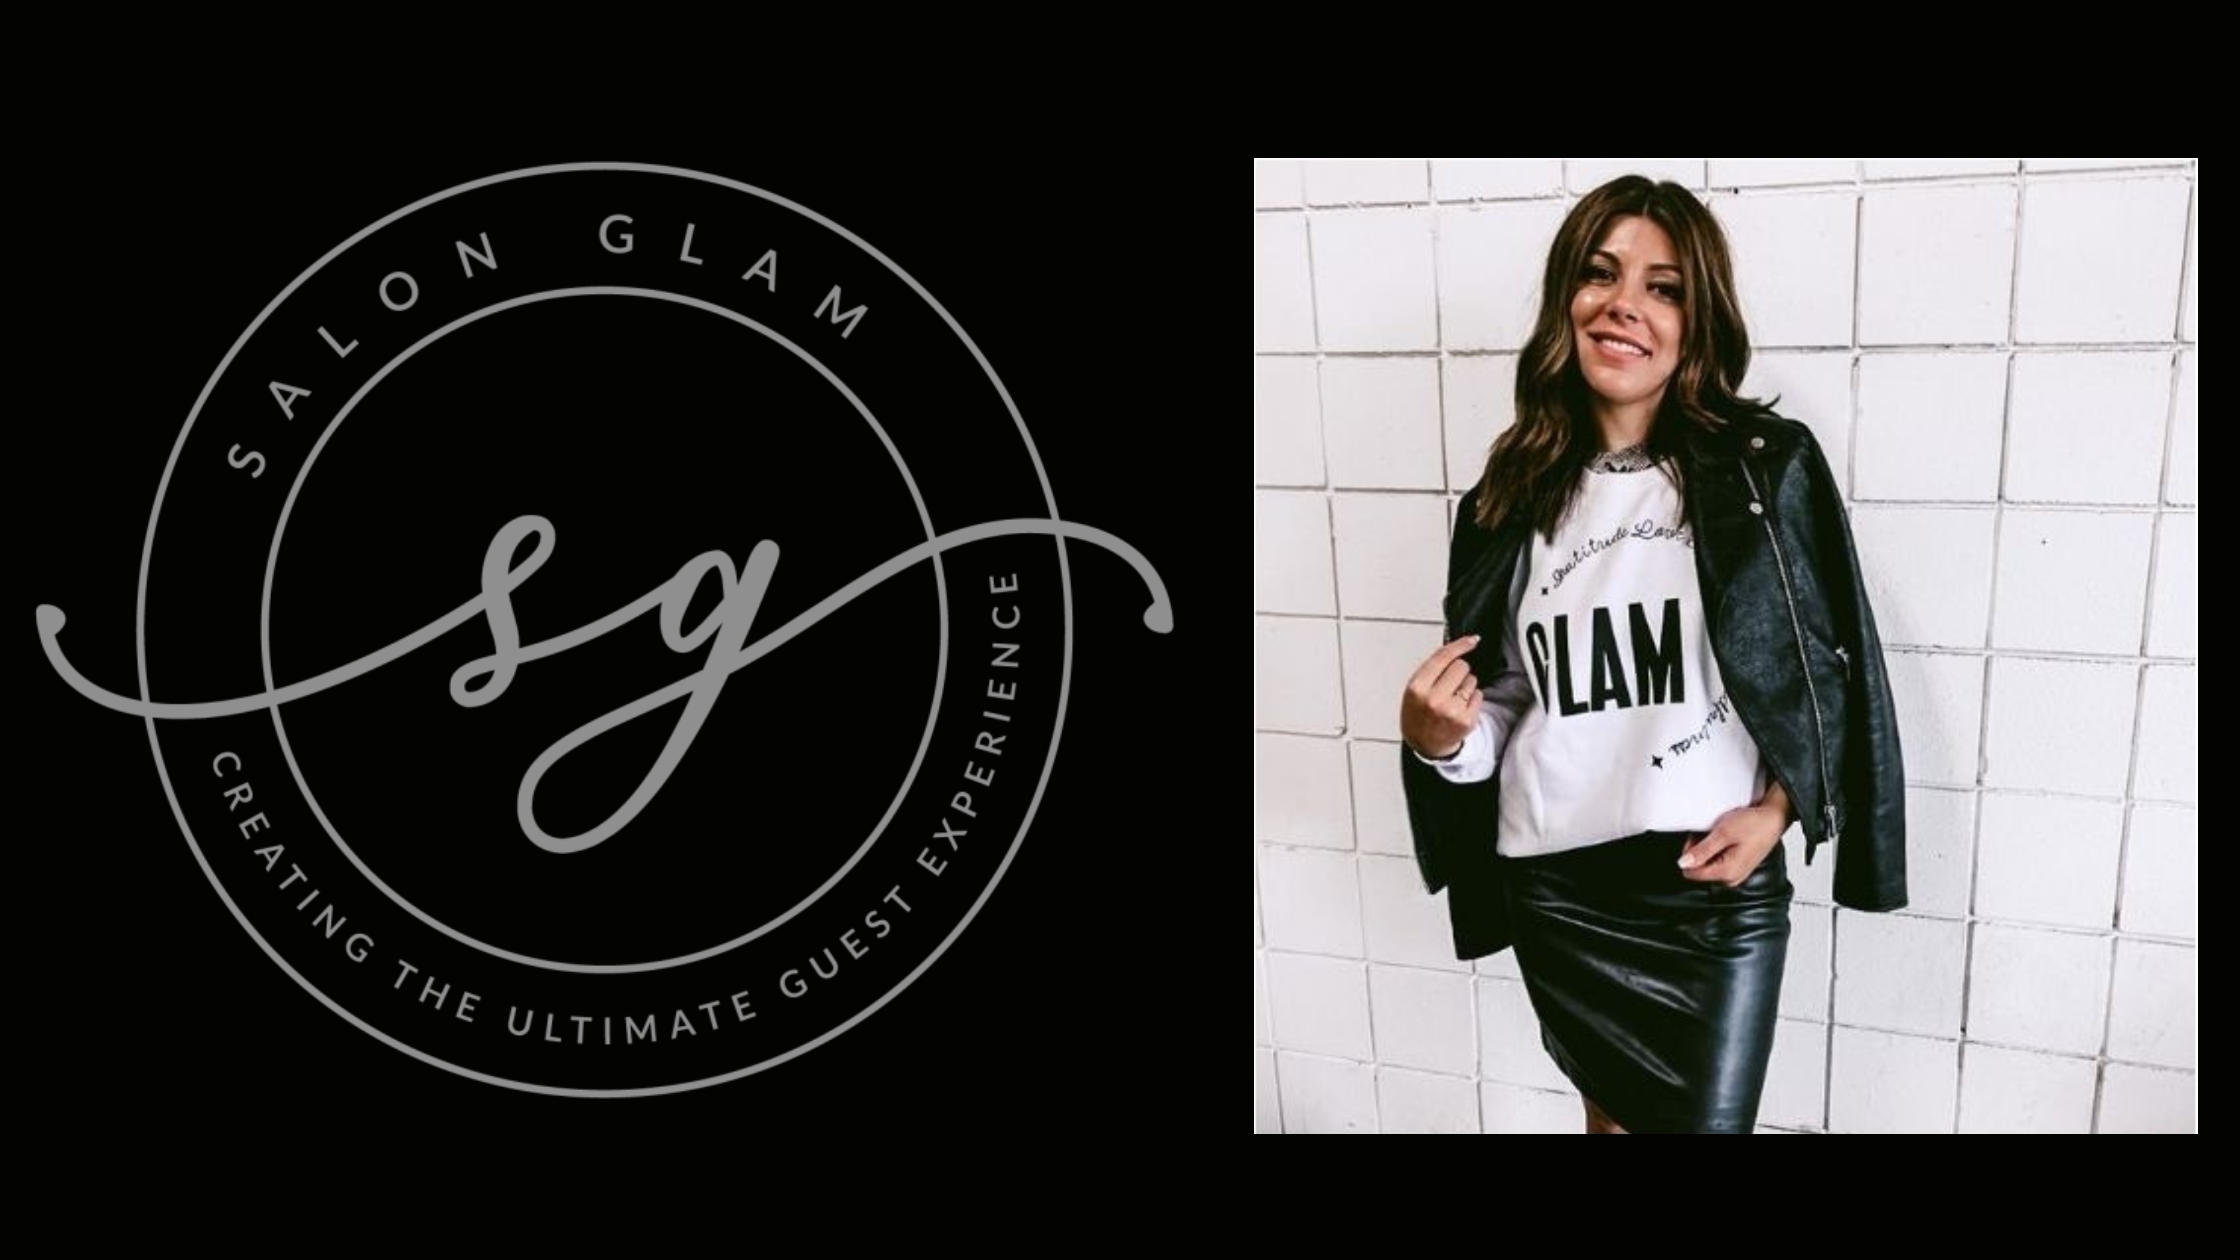 Salon Glam Logo w/ Founder Rosanna standing with black jacket white background